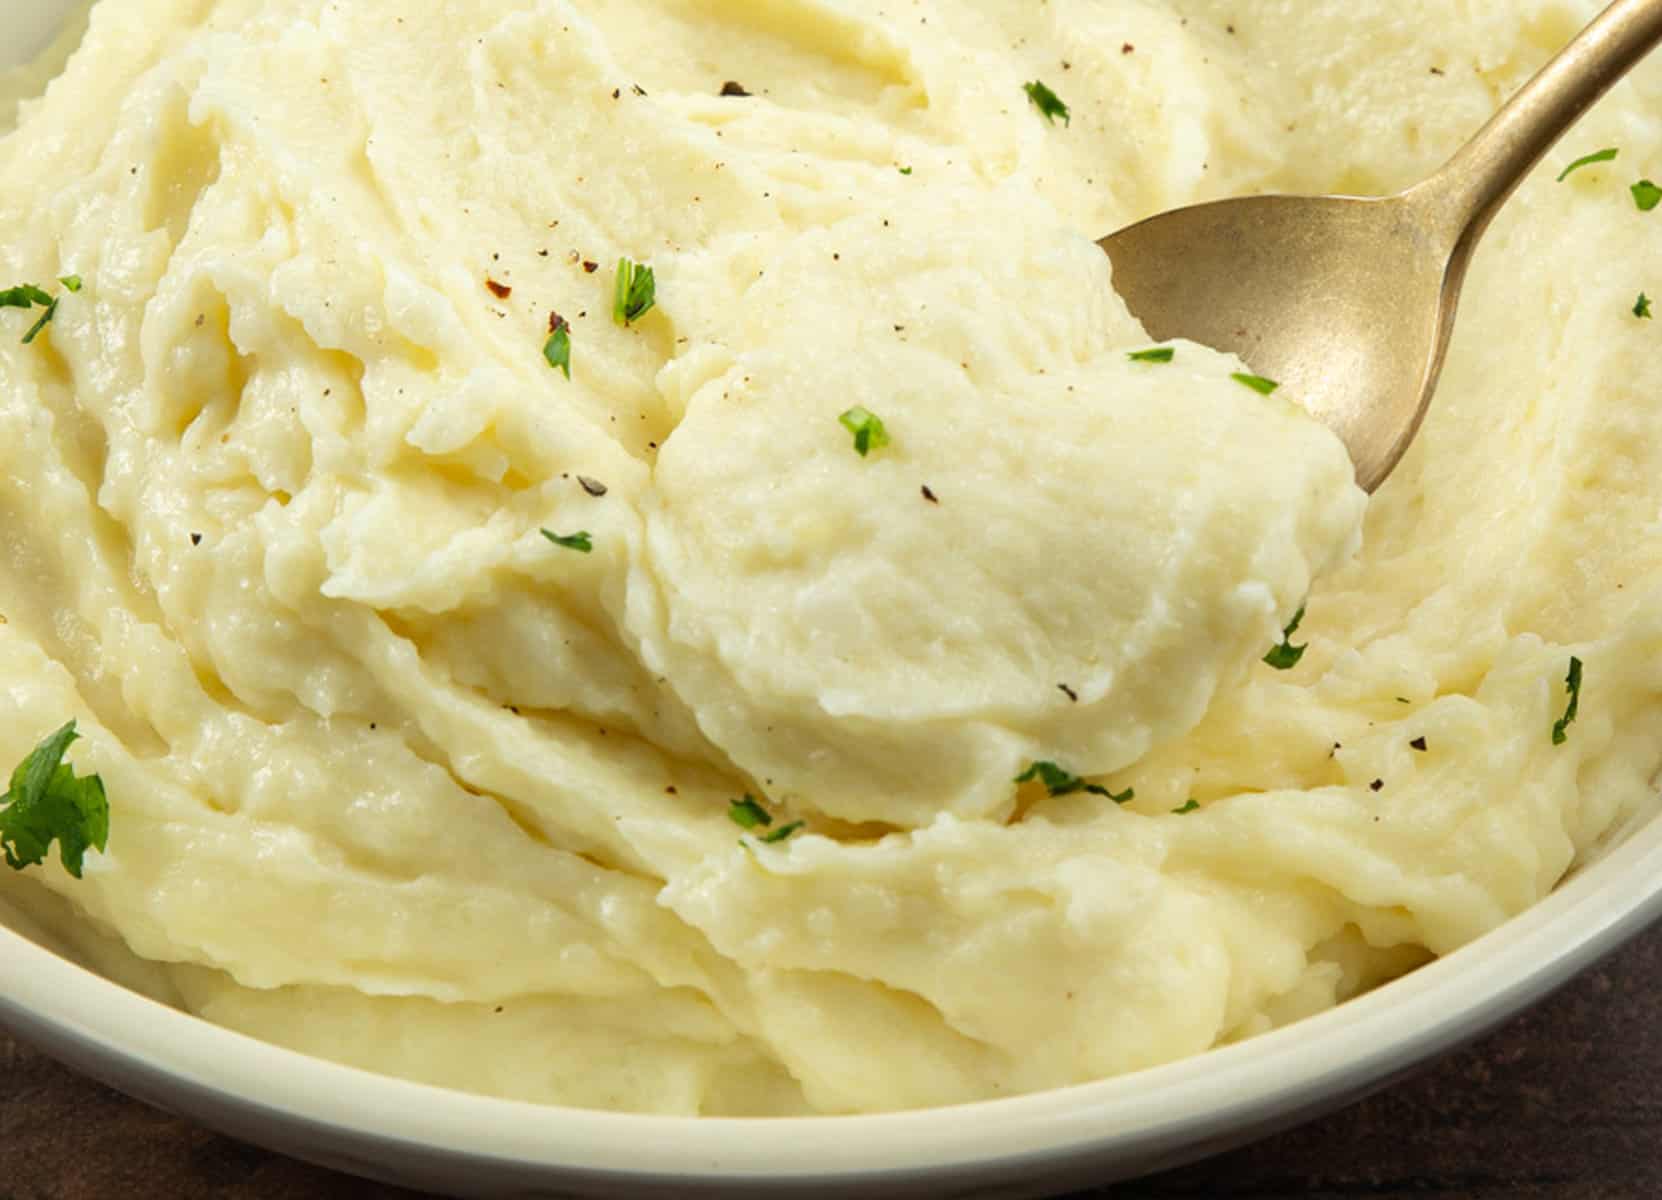 instant pot mashed potatoes | mashed potatoes instant pot | pressure cooker mashed potatoes | best mashed potatoes | easy mashed potatoes